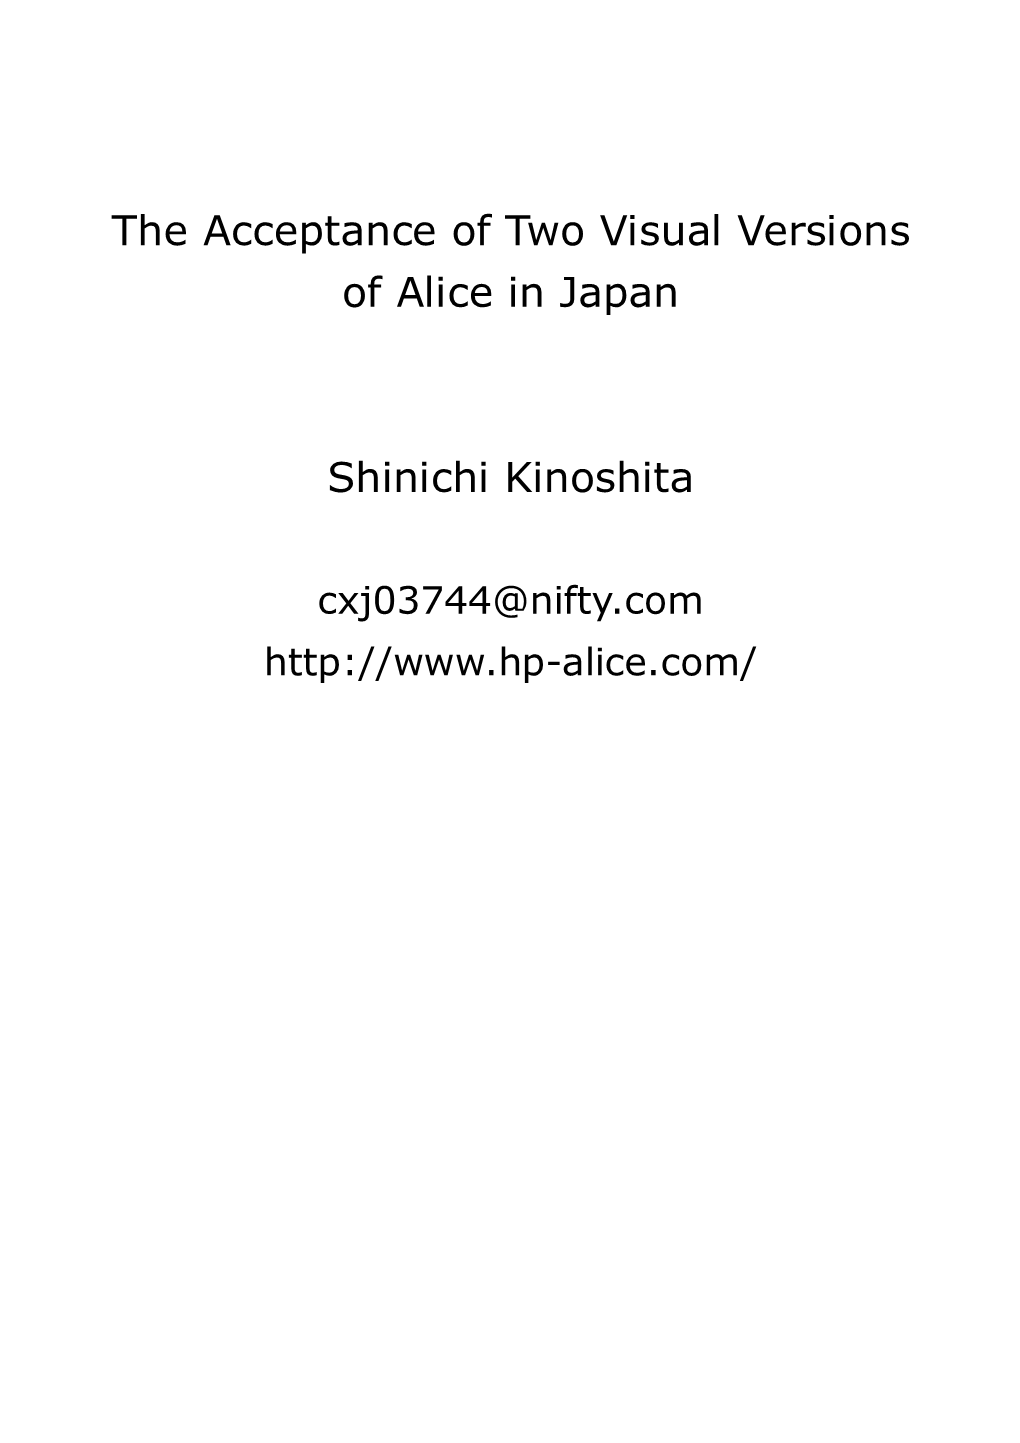 The Acceptance of Two Visual Versions of Alice in Japan Shinichi Kinoshita